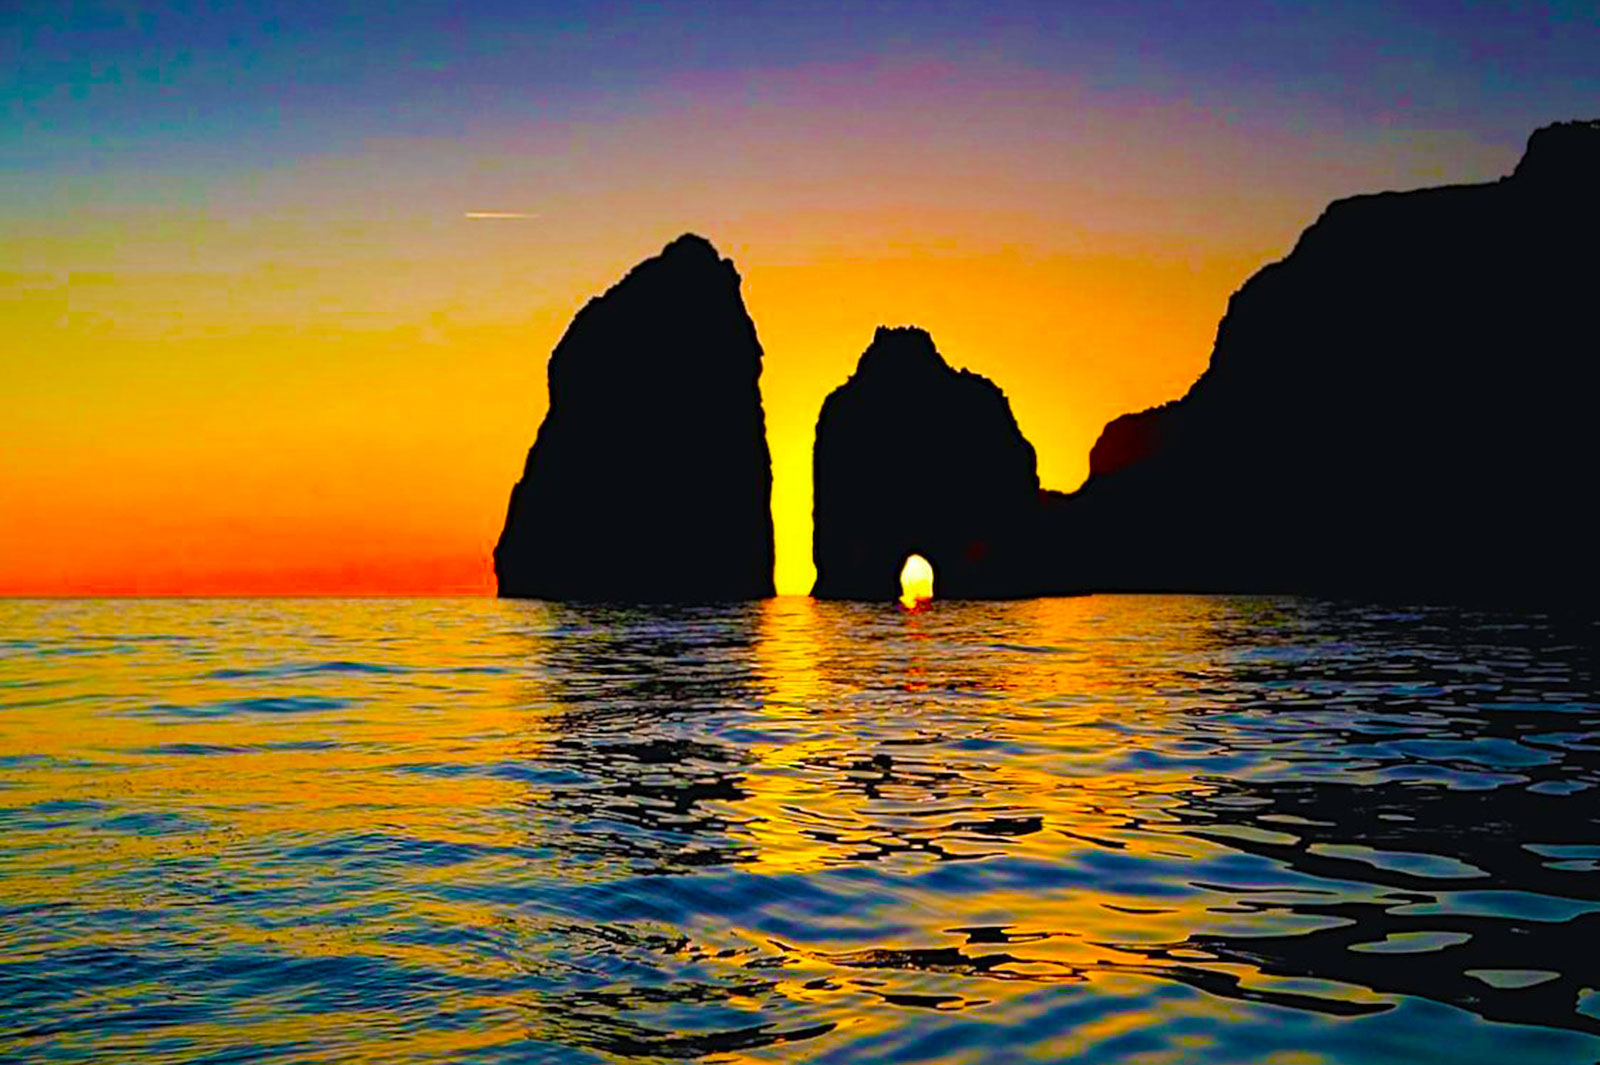 Capri Faraglioni Rocks - Sunset